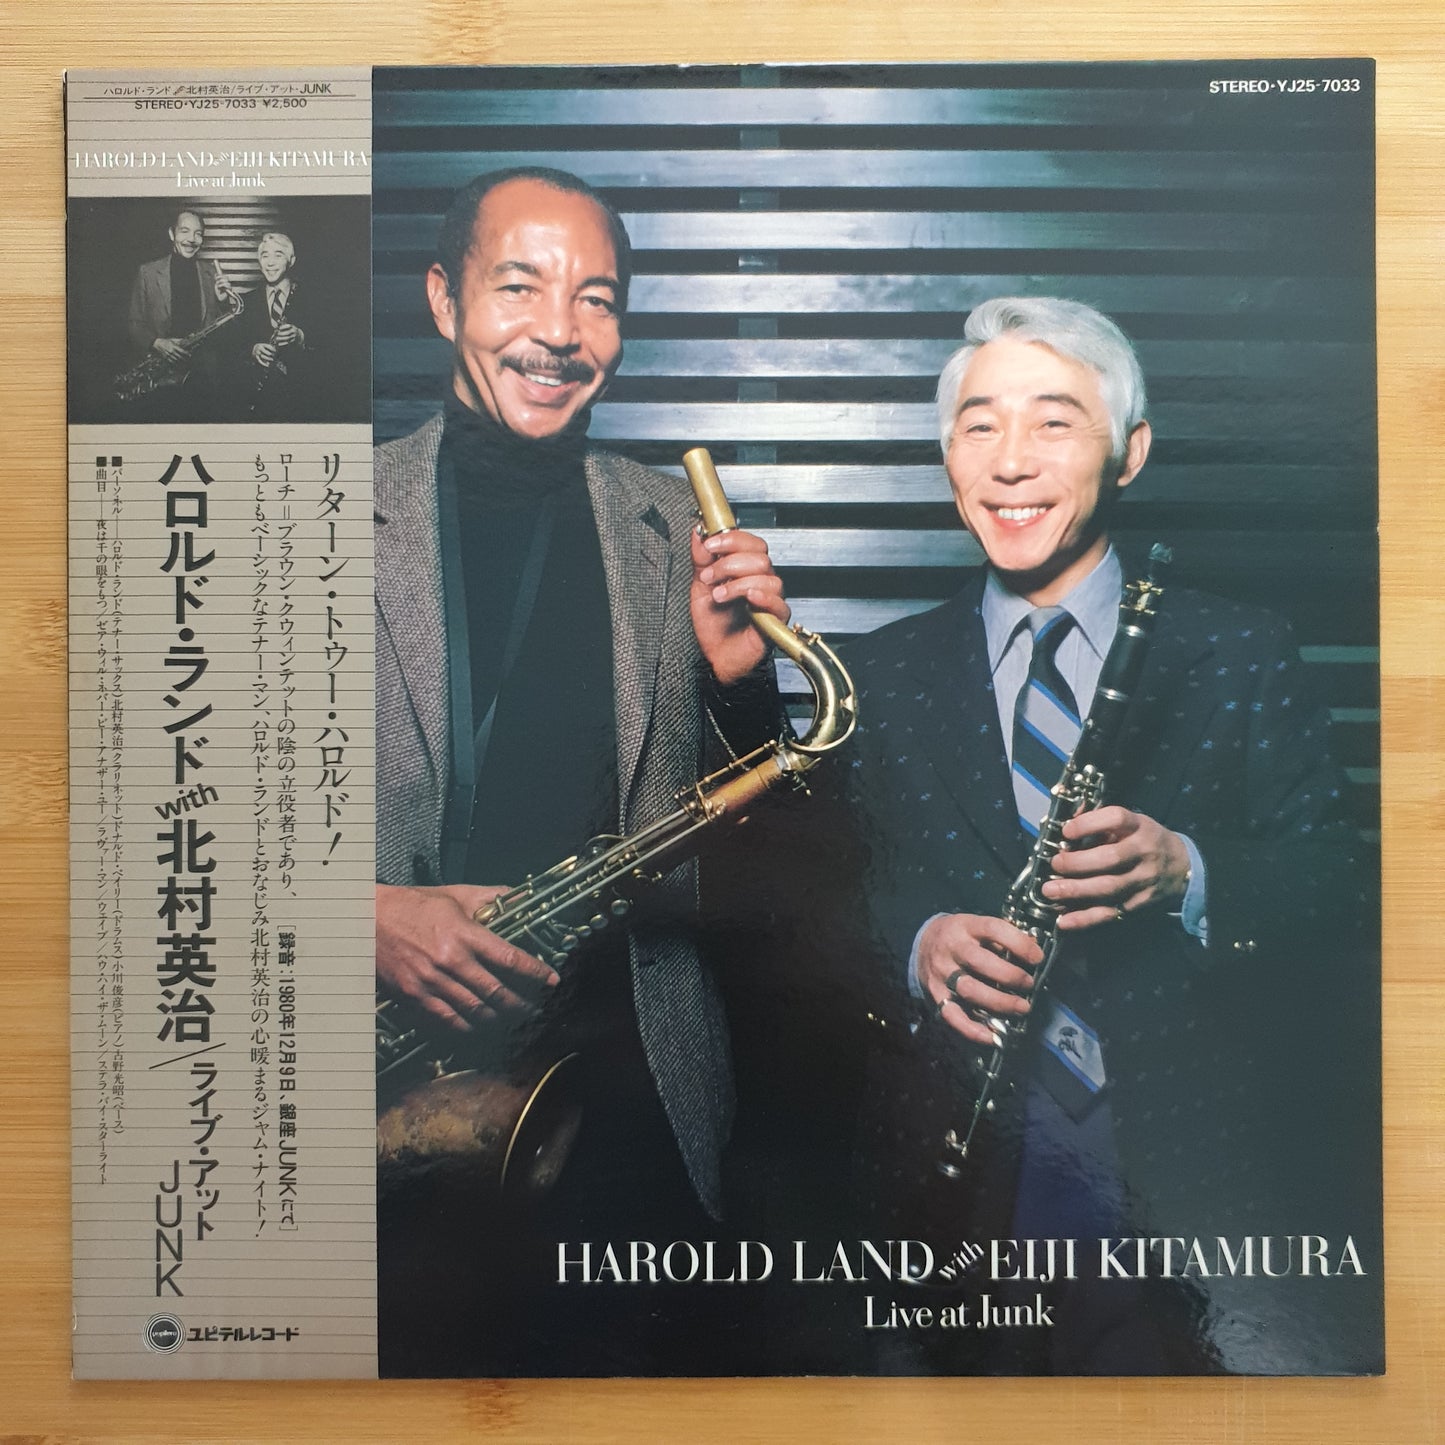 Harold Land With Eiji Kitamura - Live At Junk